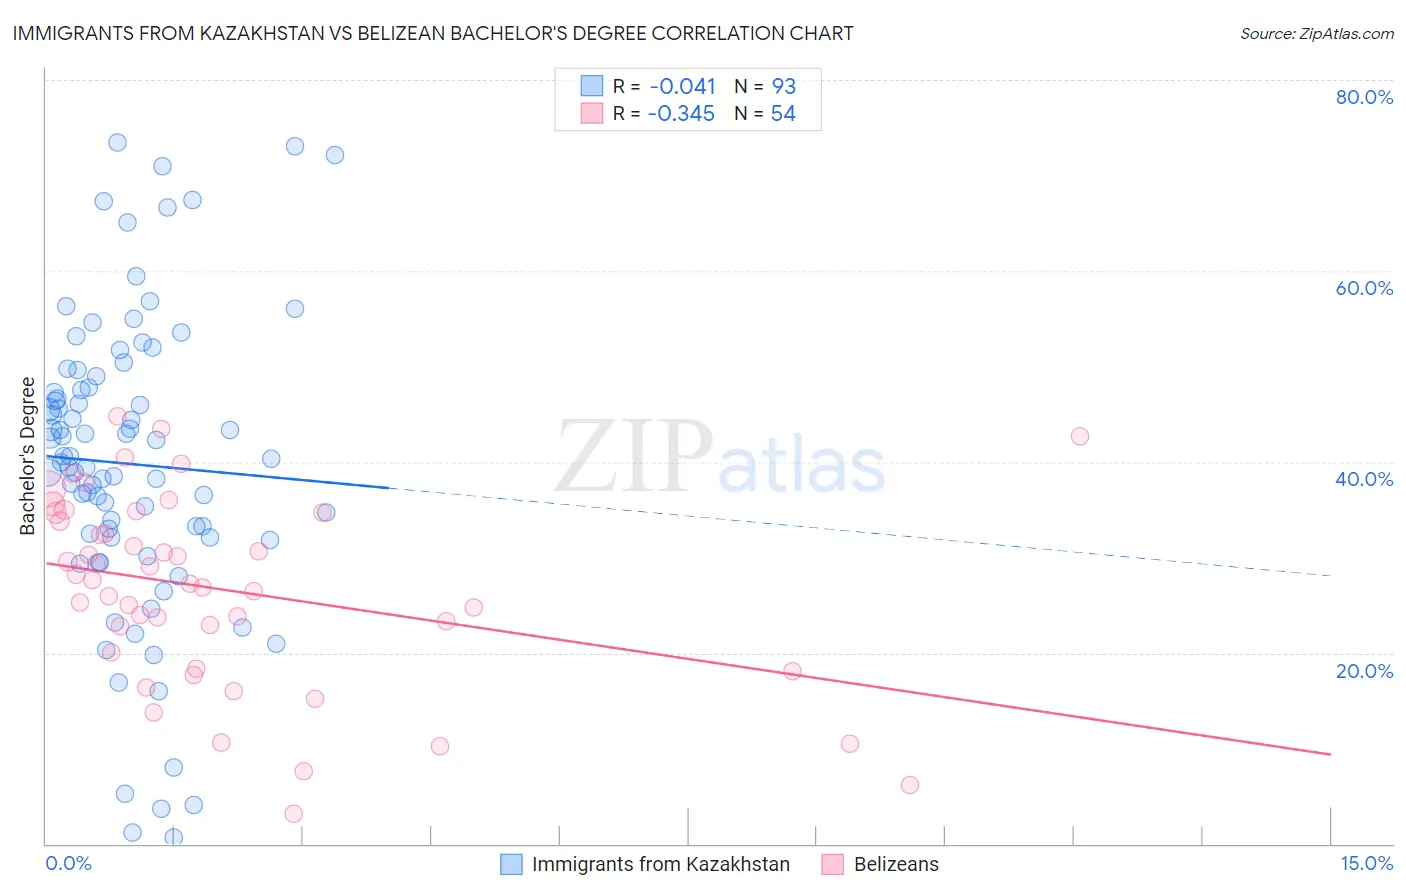 Immigrants from Kazakhstan vs Belizean Bachelor's Degree